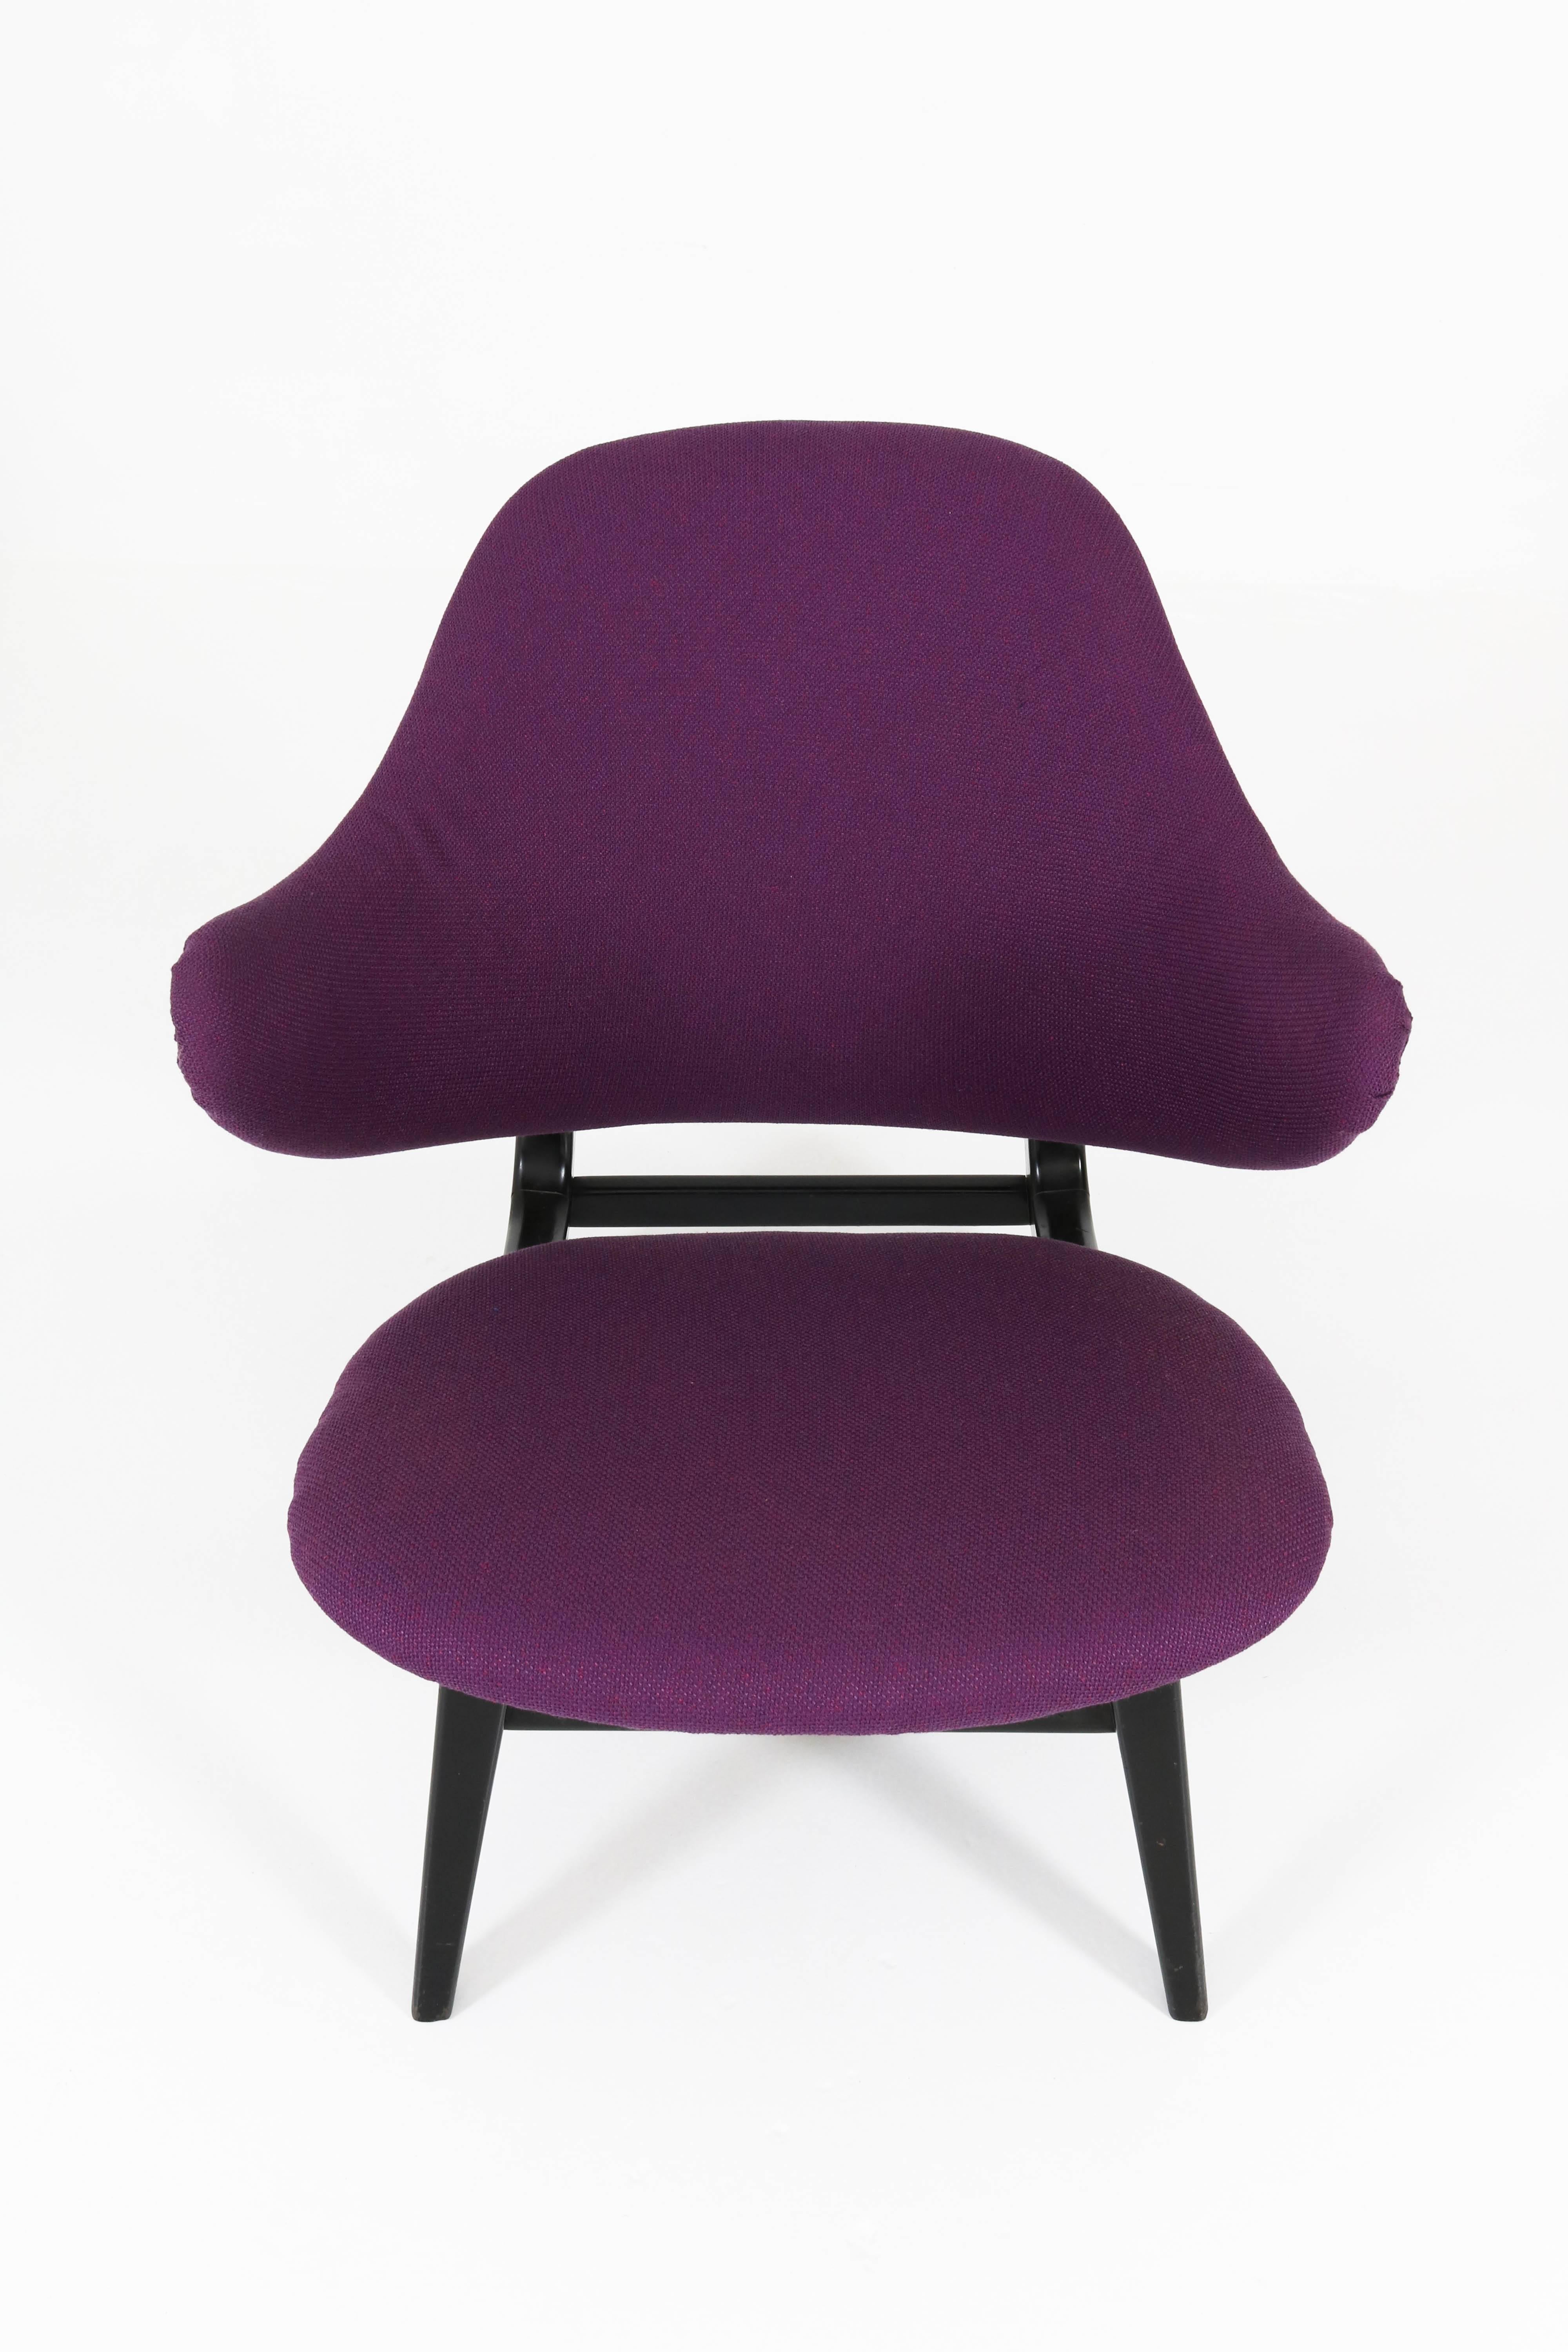 Wood Dutch Mid-Century Modern Lounge Chair by Louis Van Teeffelen for WeBe, 1960s